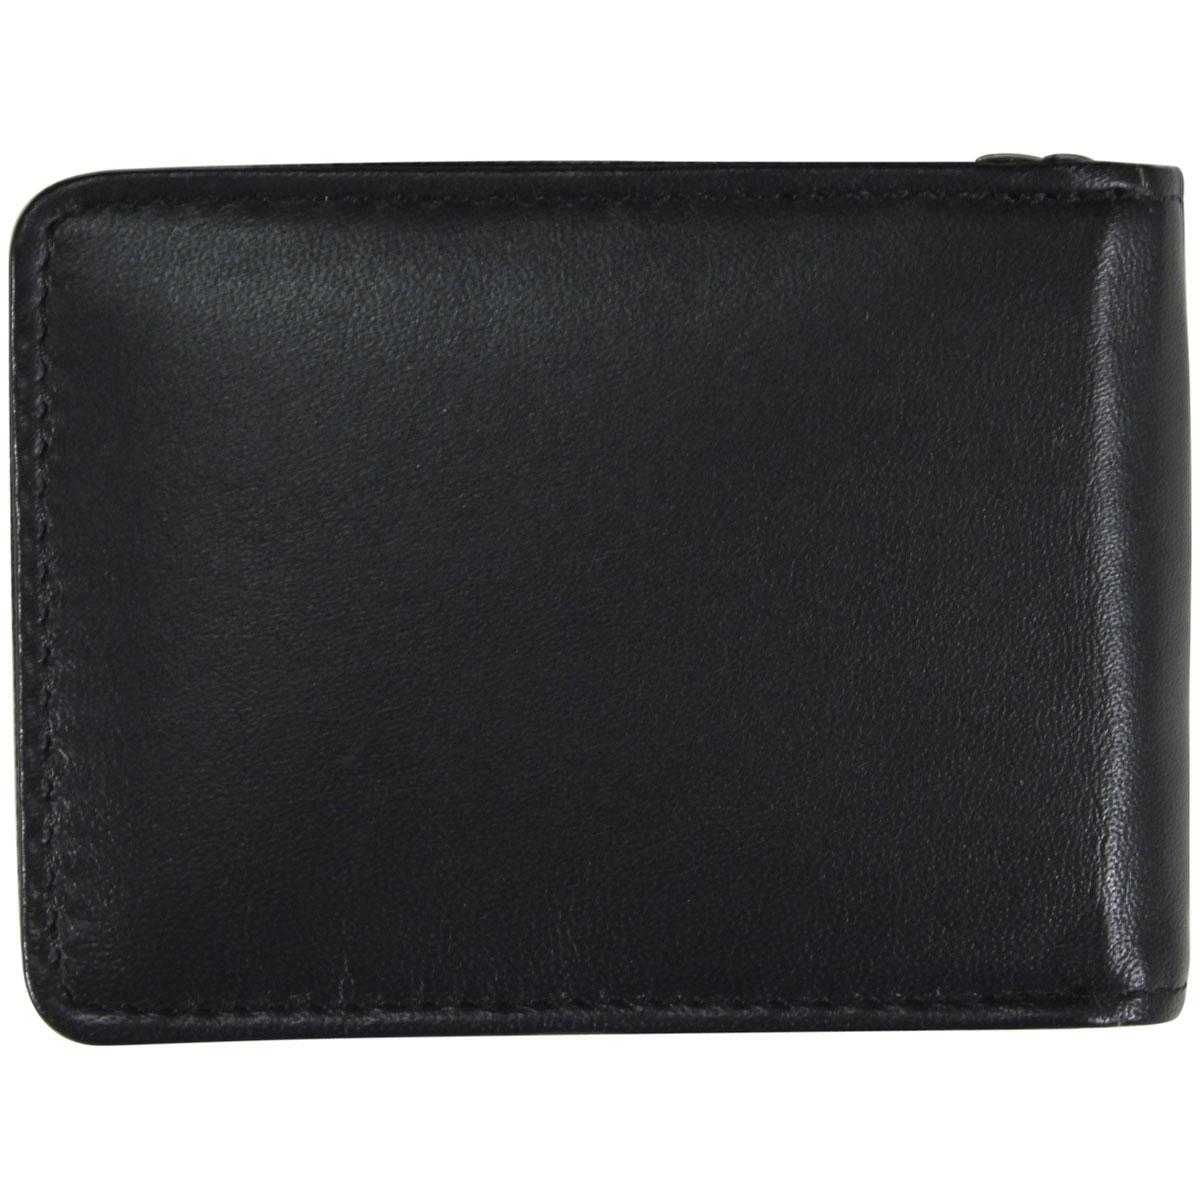 Nautica Men's Front Pocket Leather Wallet